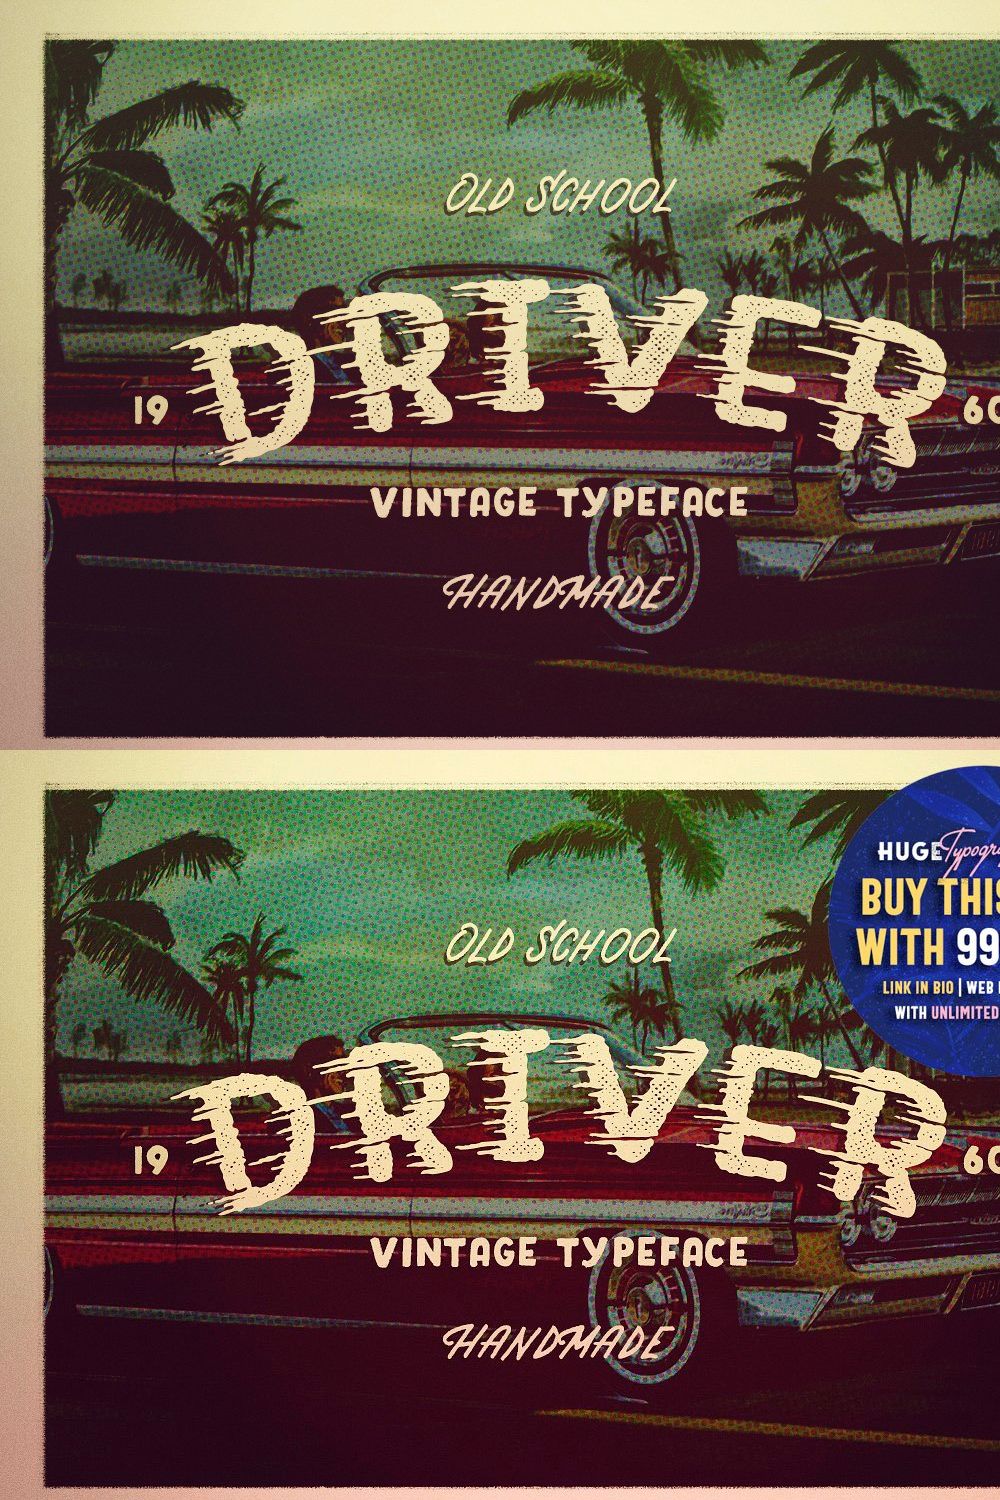 DRIVER • Retro action typeface pinterest preview image.